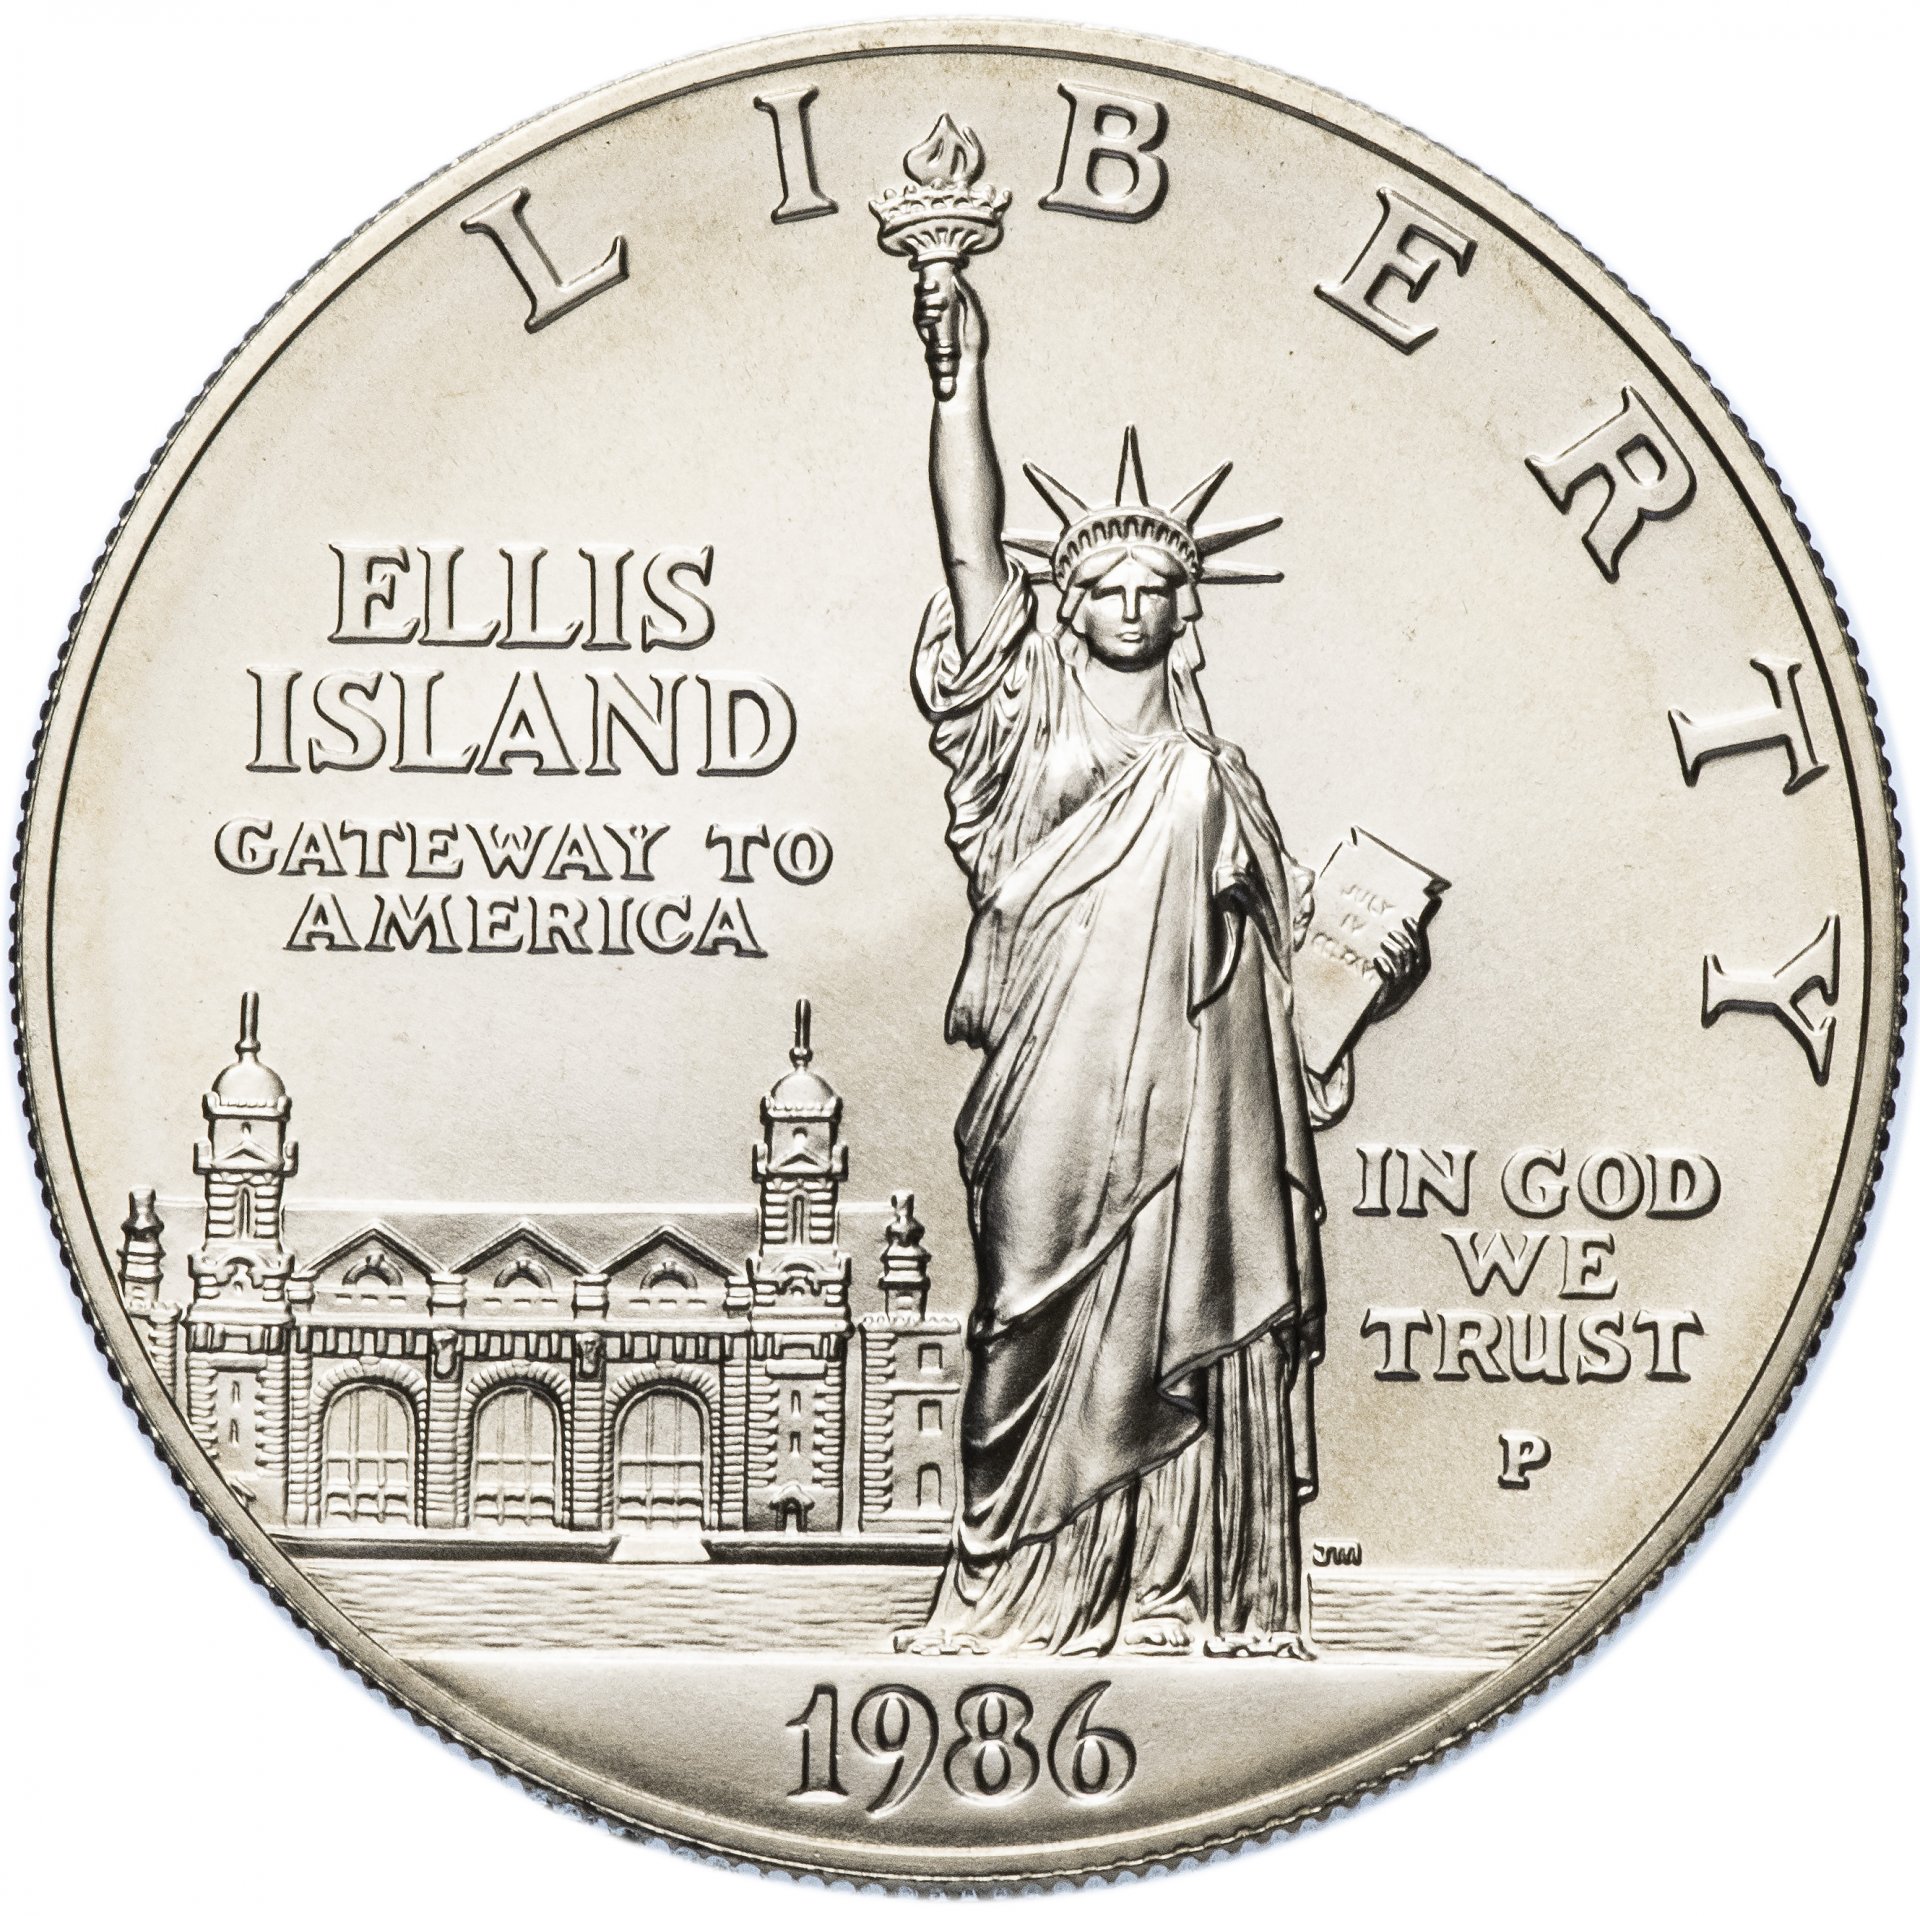 1 доллар против. США, серебряная монета 1 доллар, 100 лет статуе свободы, 1986 года. США 1 доллар 1986 статуя. 1 Доллар Ellis Island 1986 год. 1 Доллар 1986 США монета.